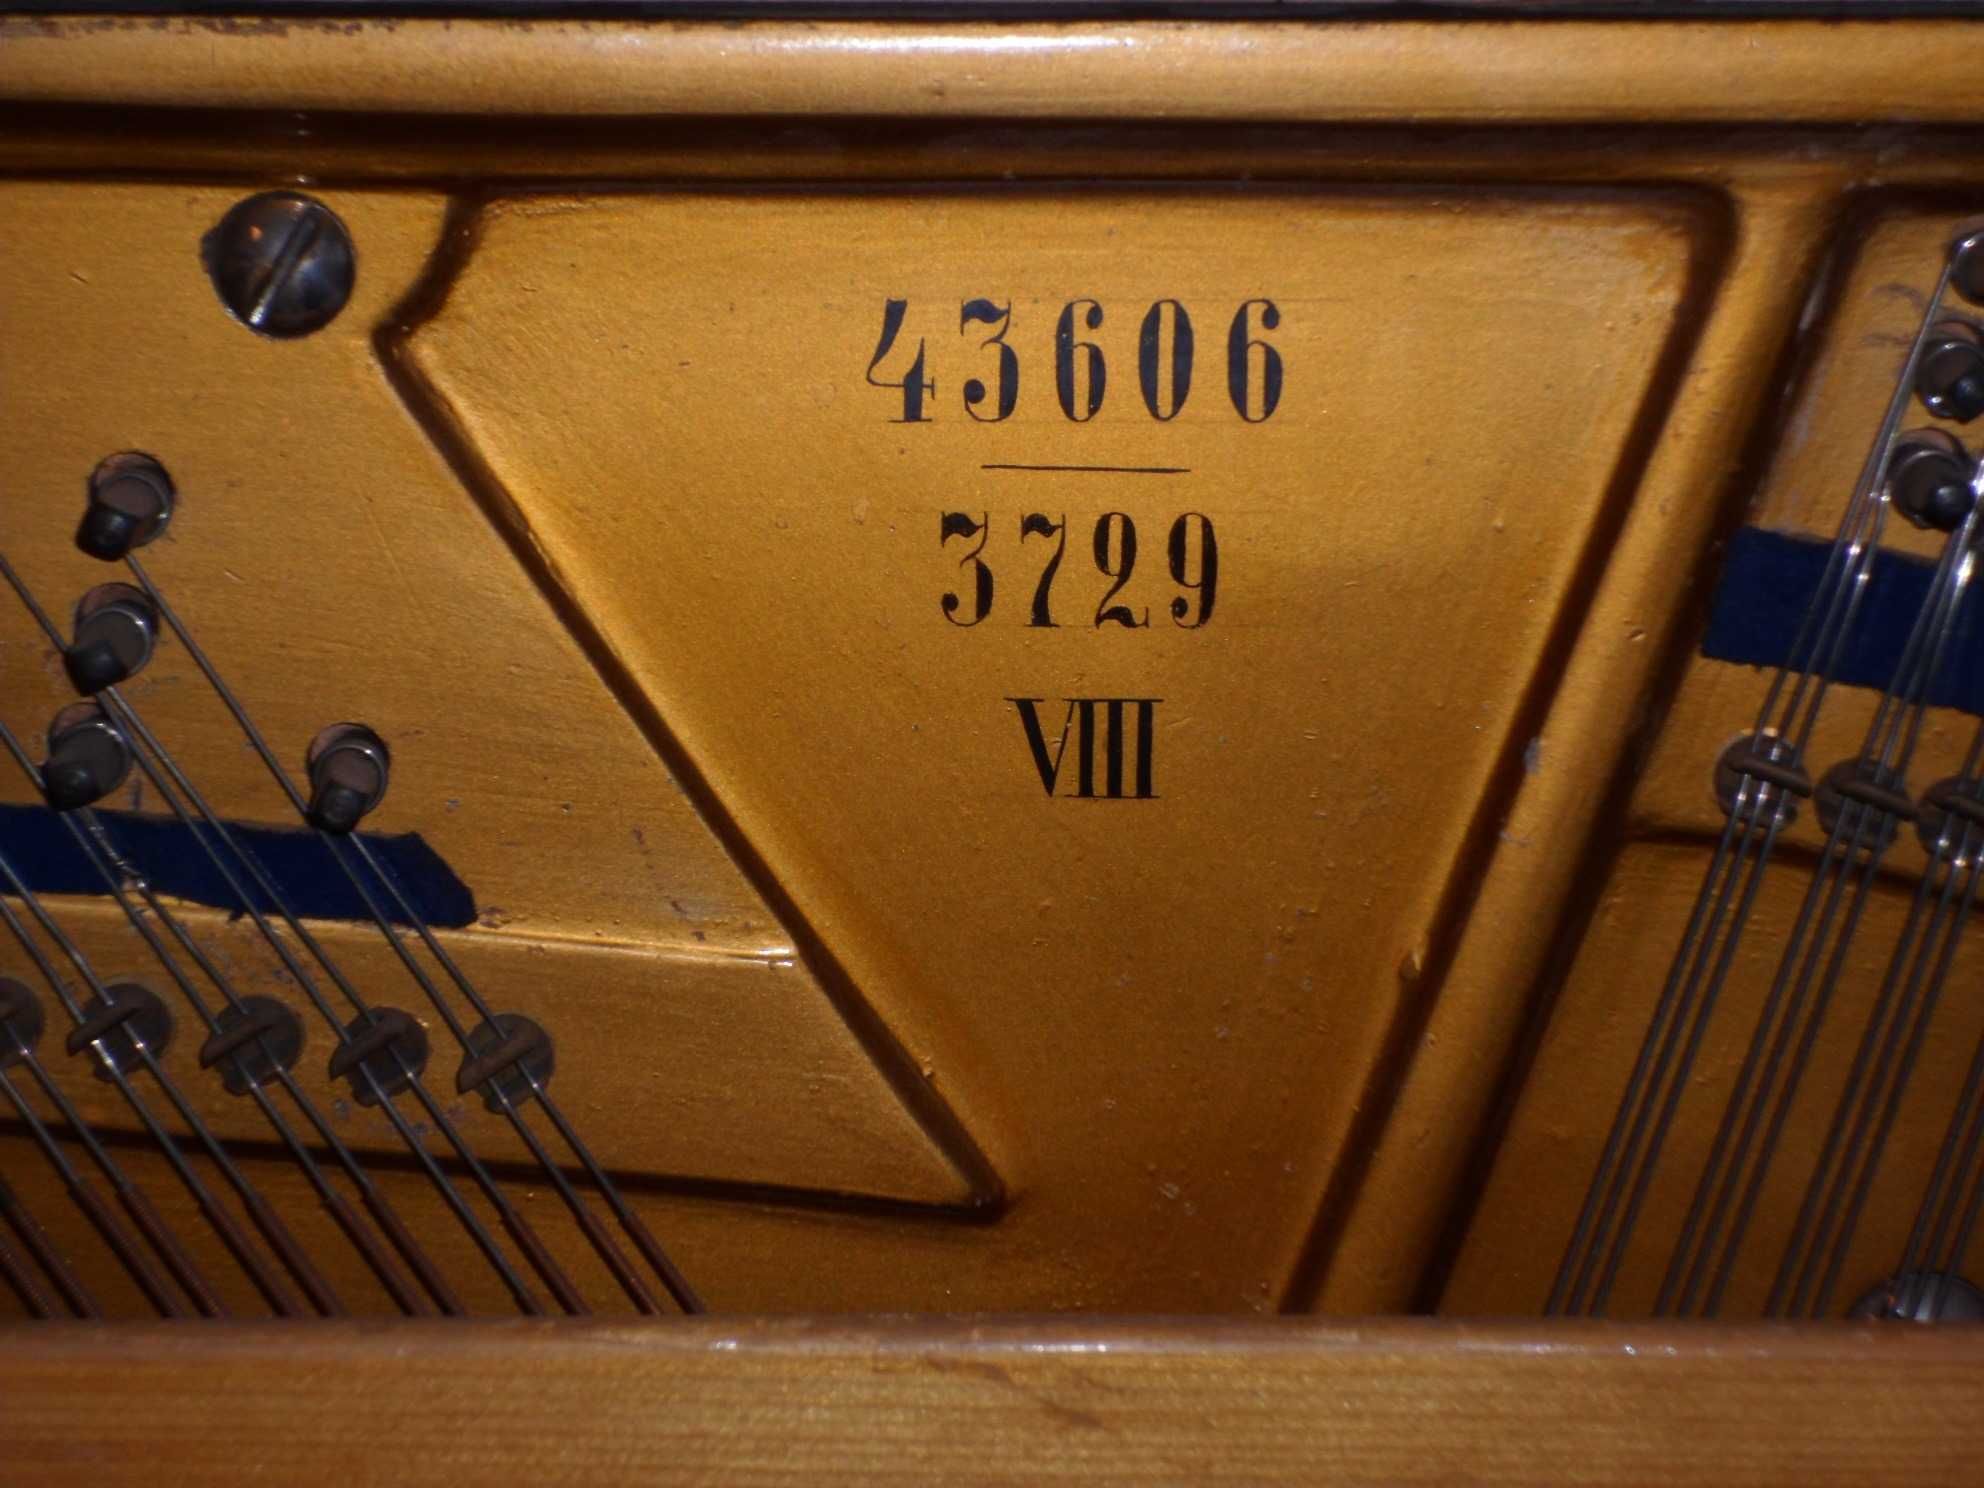 Старовинне, антикварне фортепіано Шредер (S.M.SCHREDER) 145 років